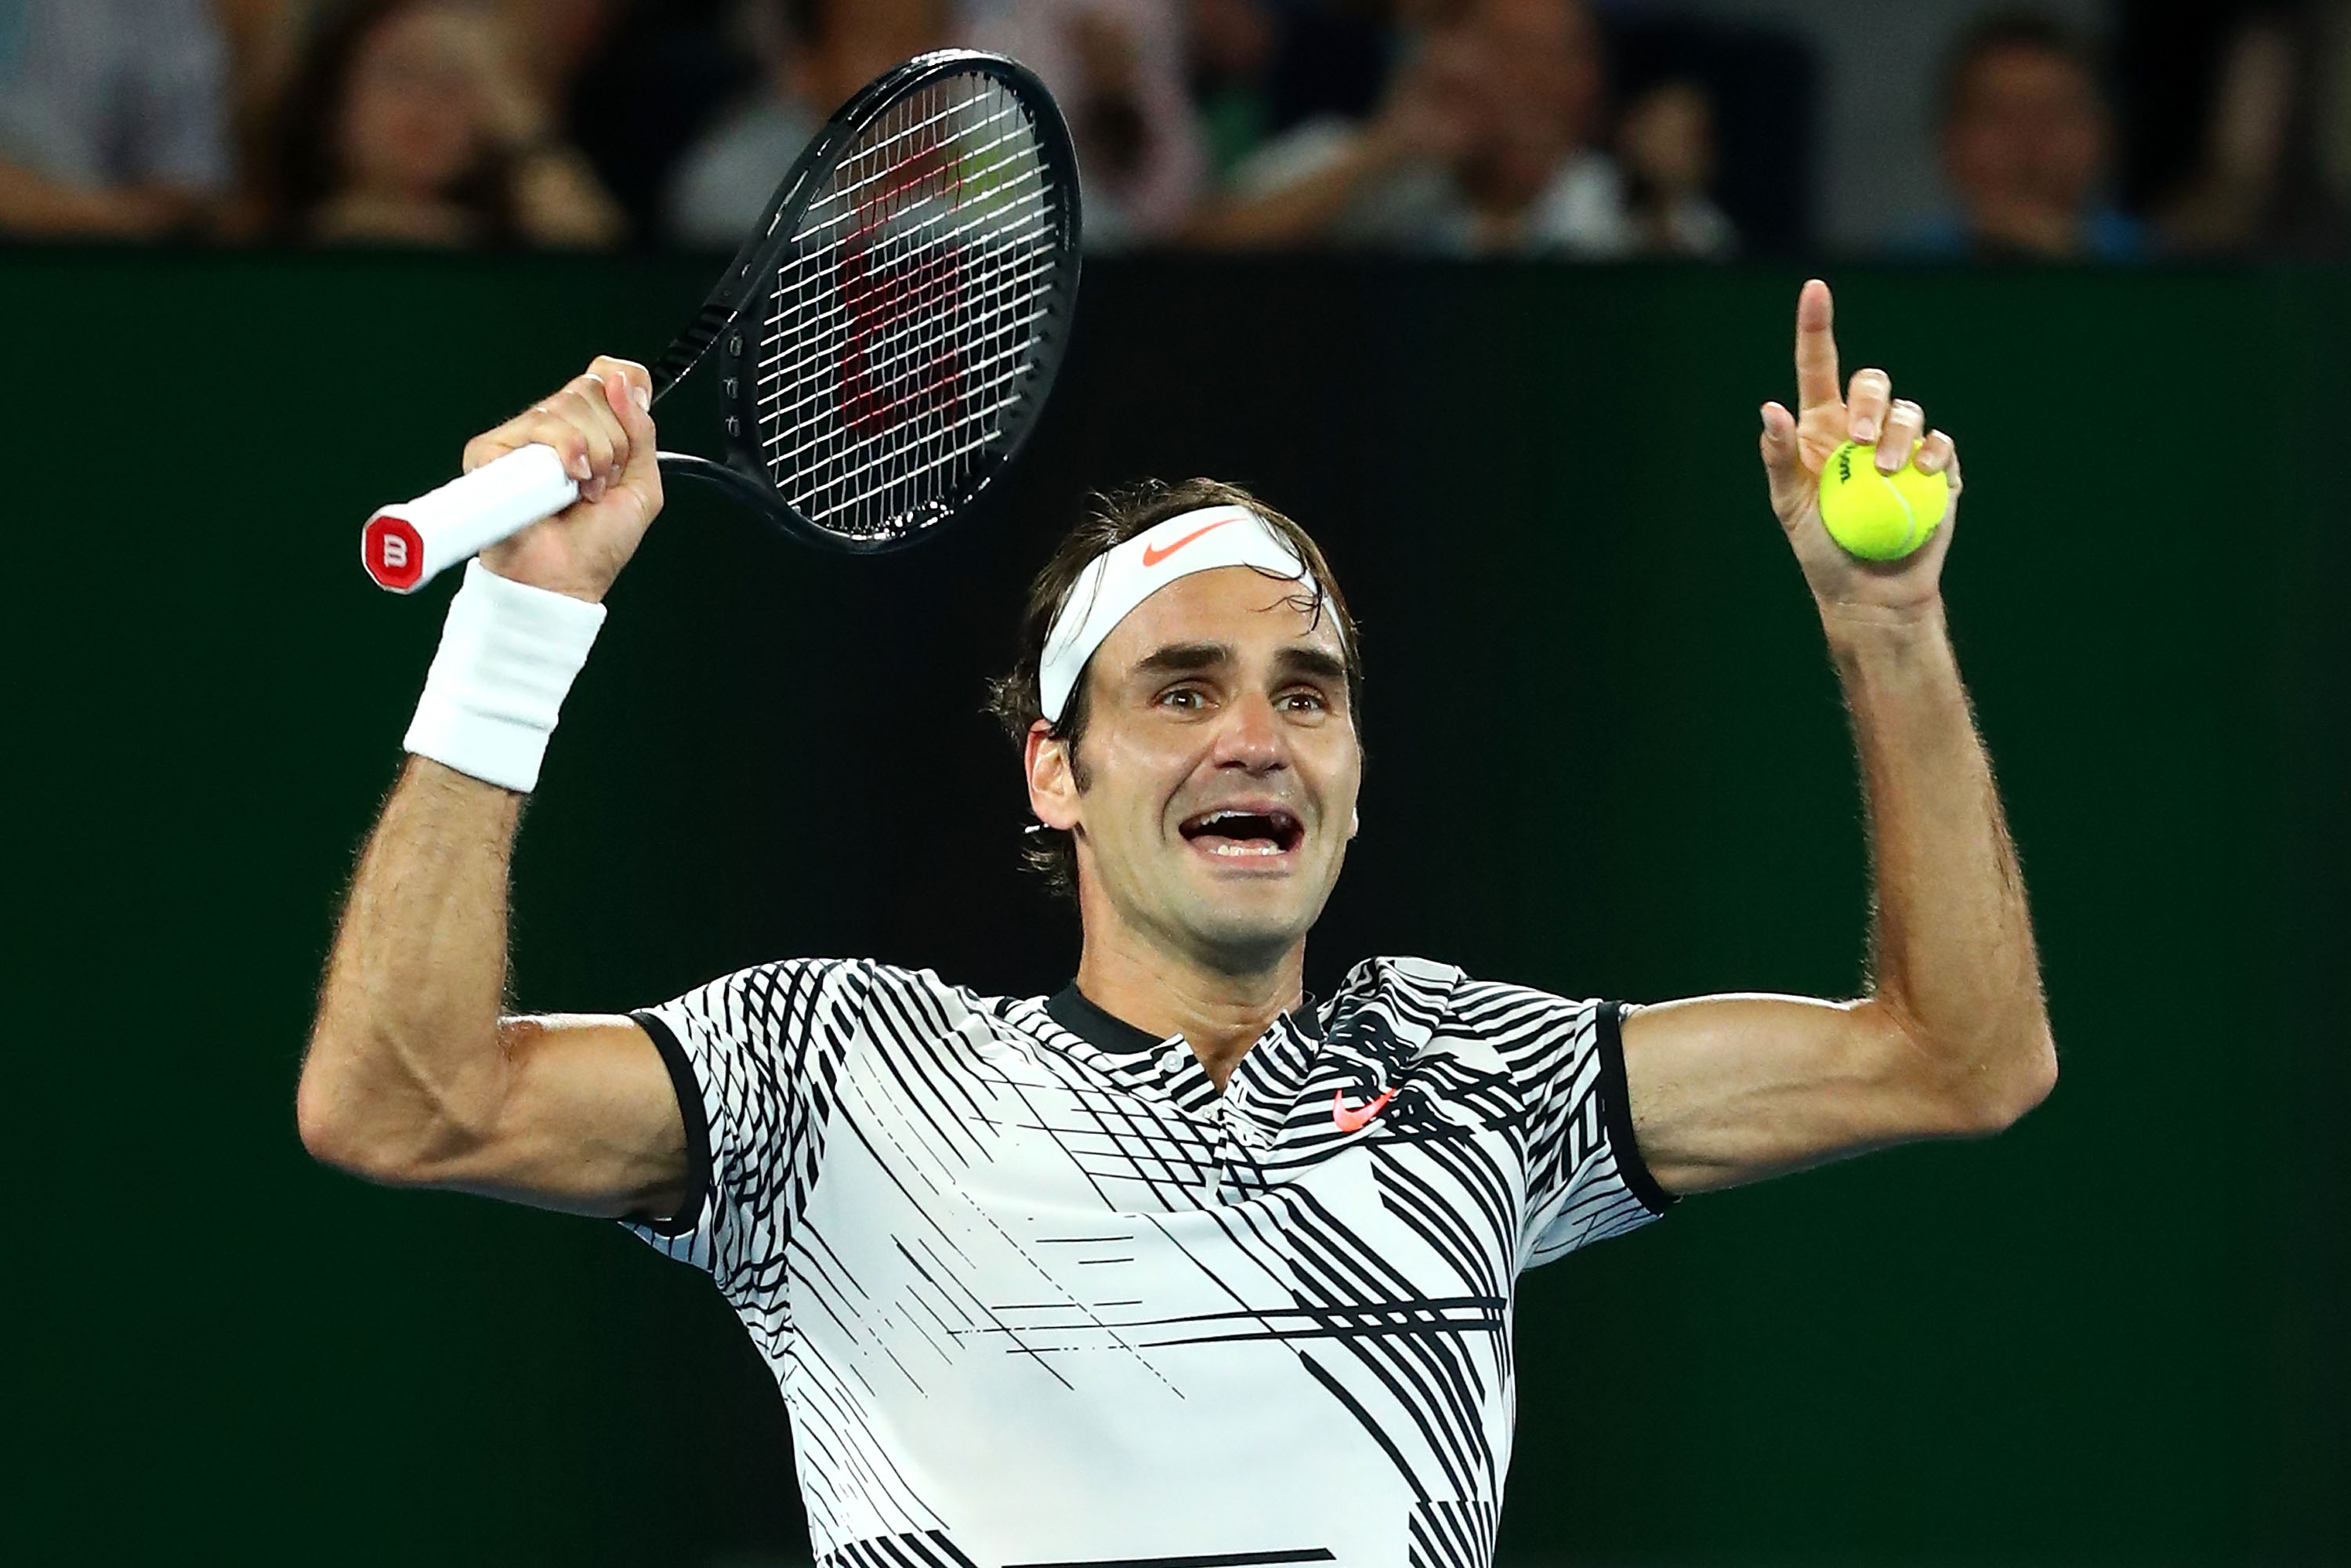 VIDEO | Roger Federer stuns Novak Djokovic with unreal reflexes at the net during Paris semi final